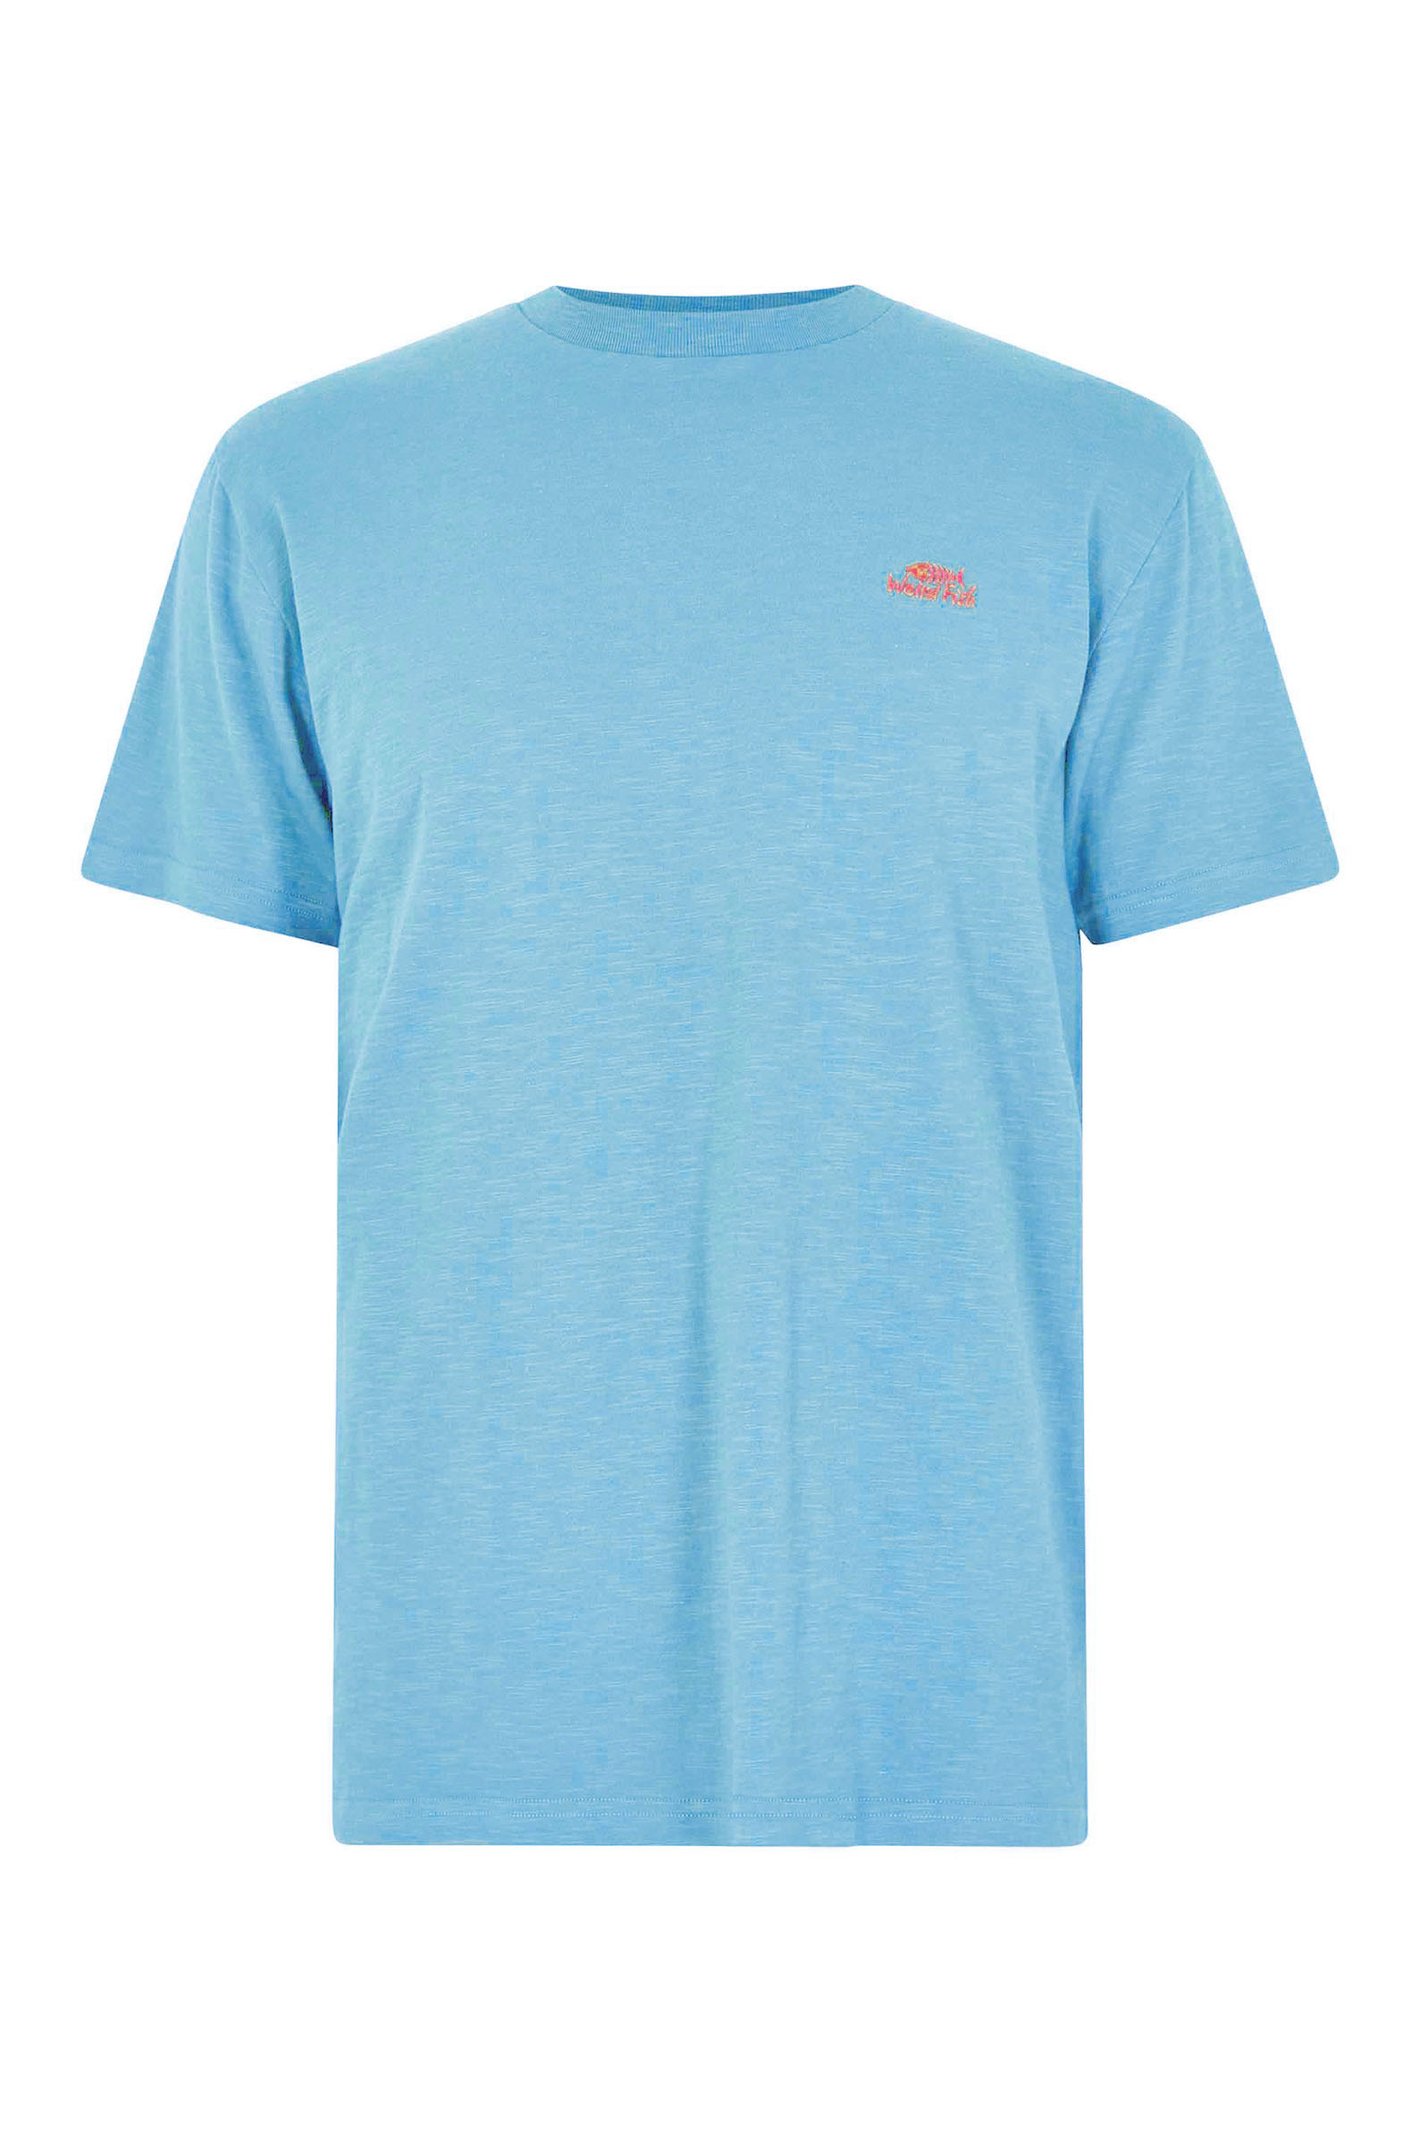 Weird Fish Fished Organic Cotton T-Shirt Sky Blue Size 5XL